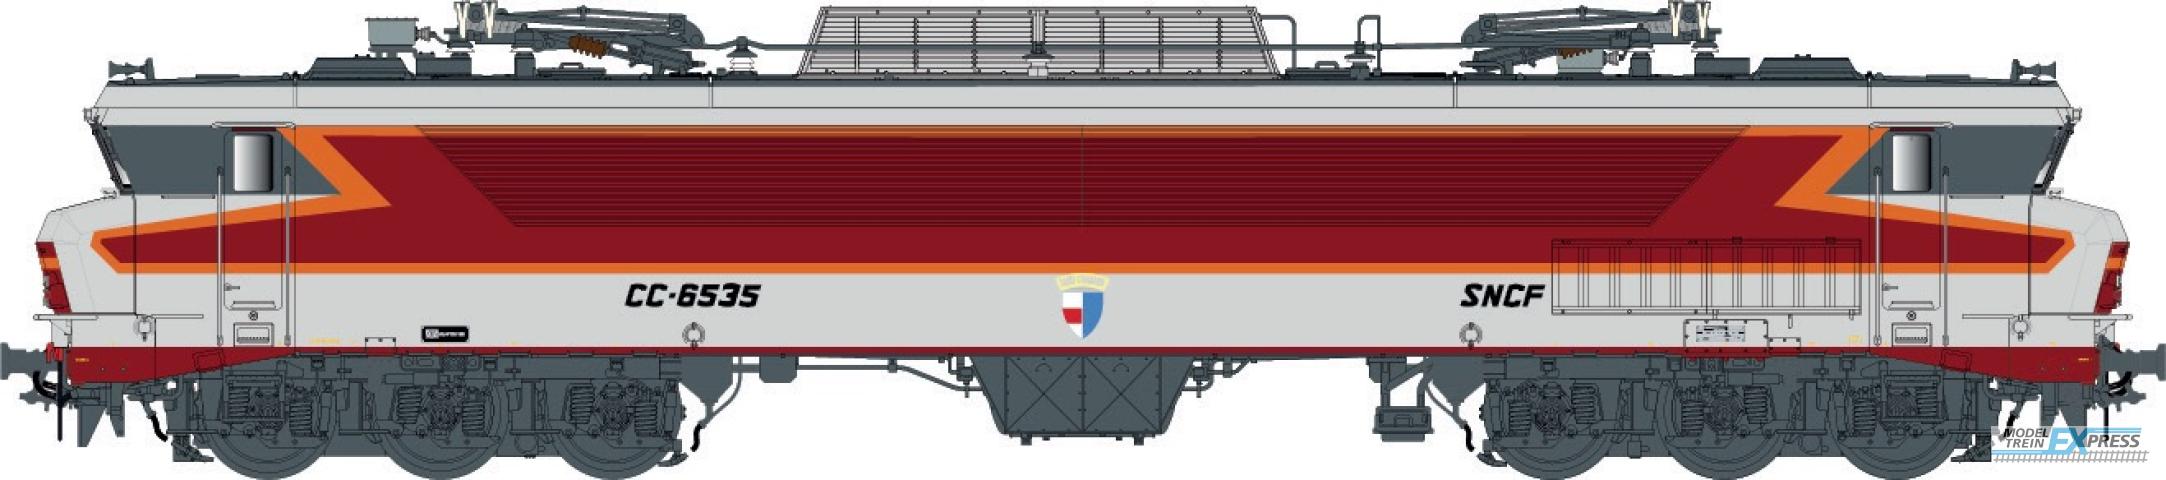 LS Models 10331 CC 6535, greymetalic, livery ARZENS, Lyon Mouche depot, 200 Km/h  /  Ep. IV  /  SNCF  /  HO  /  DC  /  1 P.